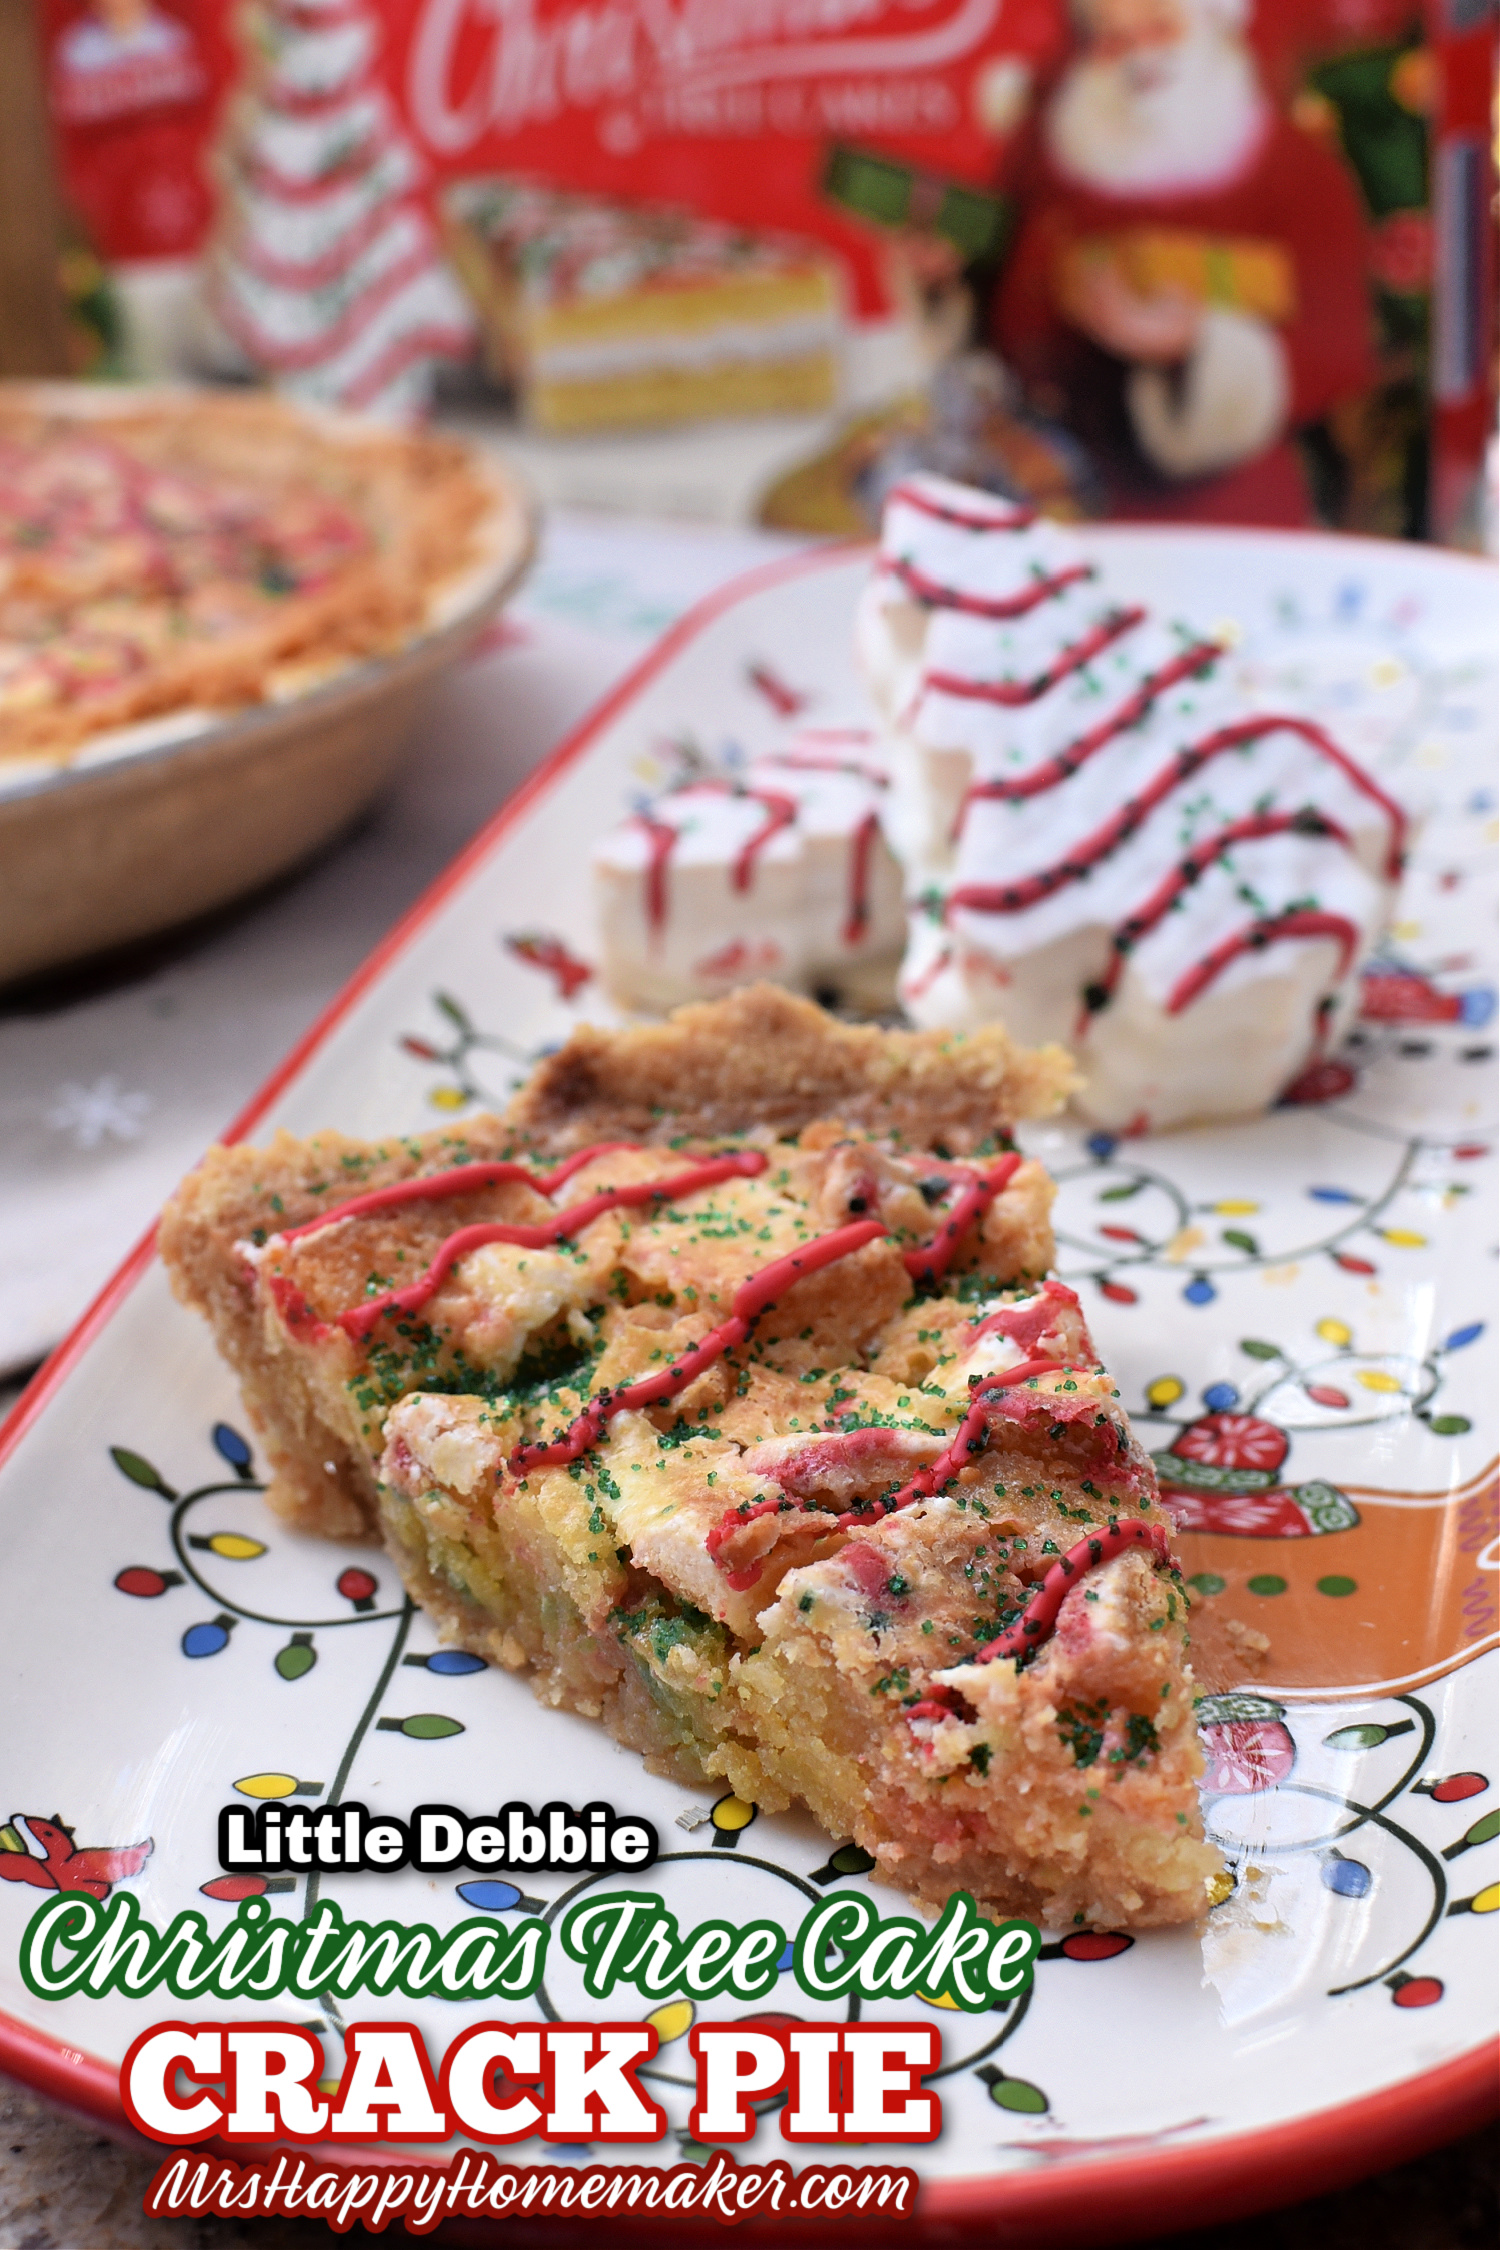 Little Debbie Christmas Tree Cake Crack Pie - Mrs Happy Homemaker